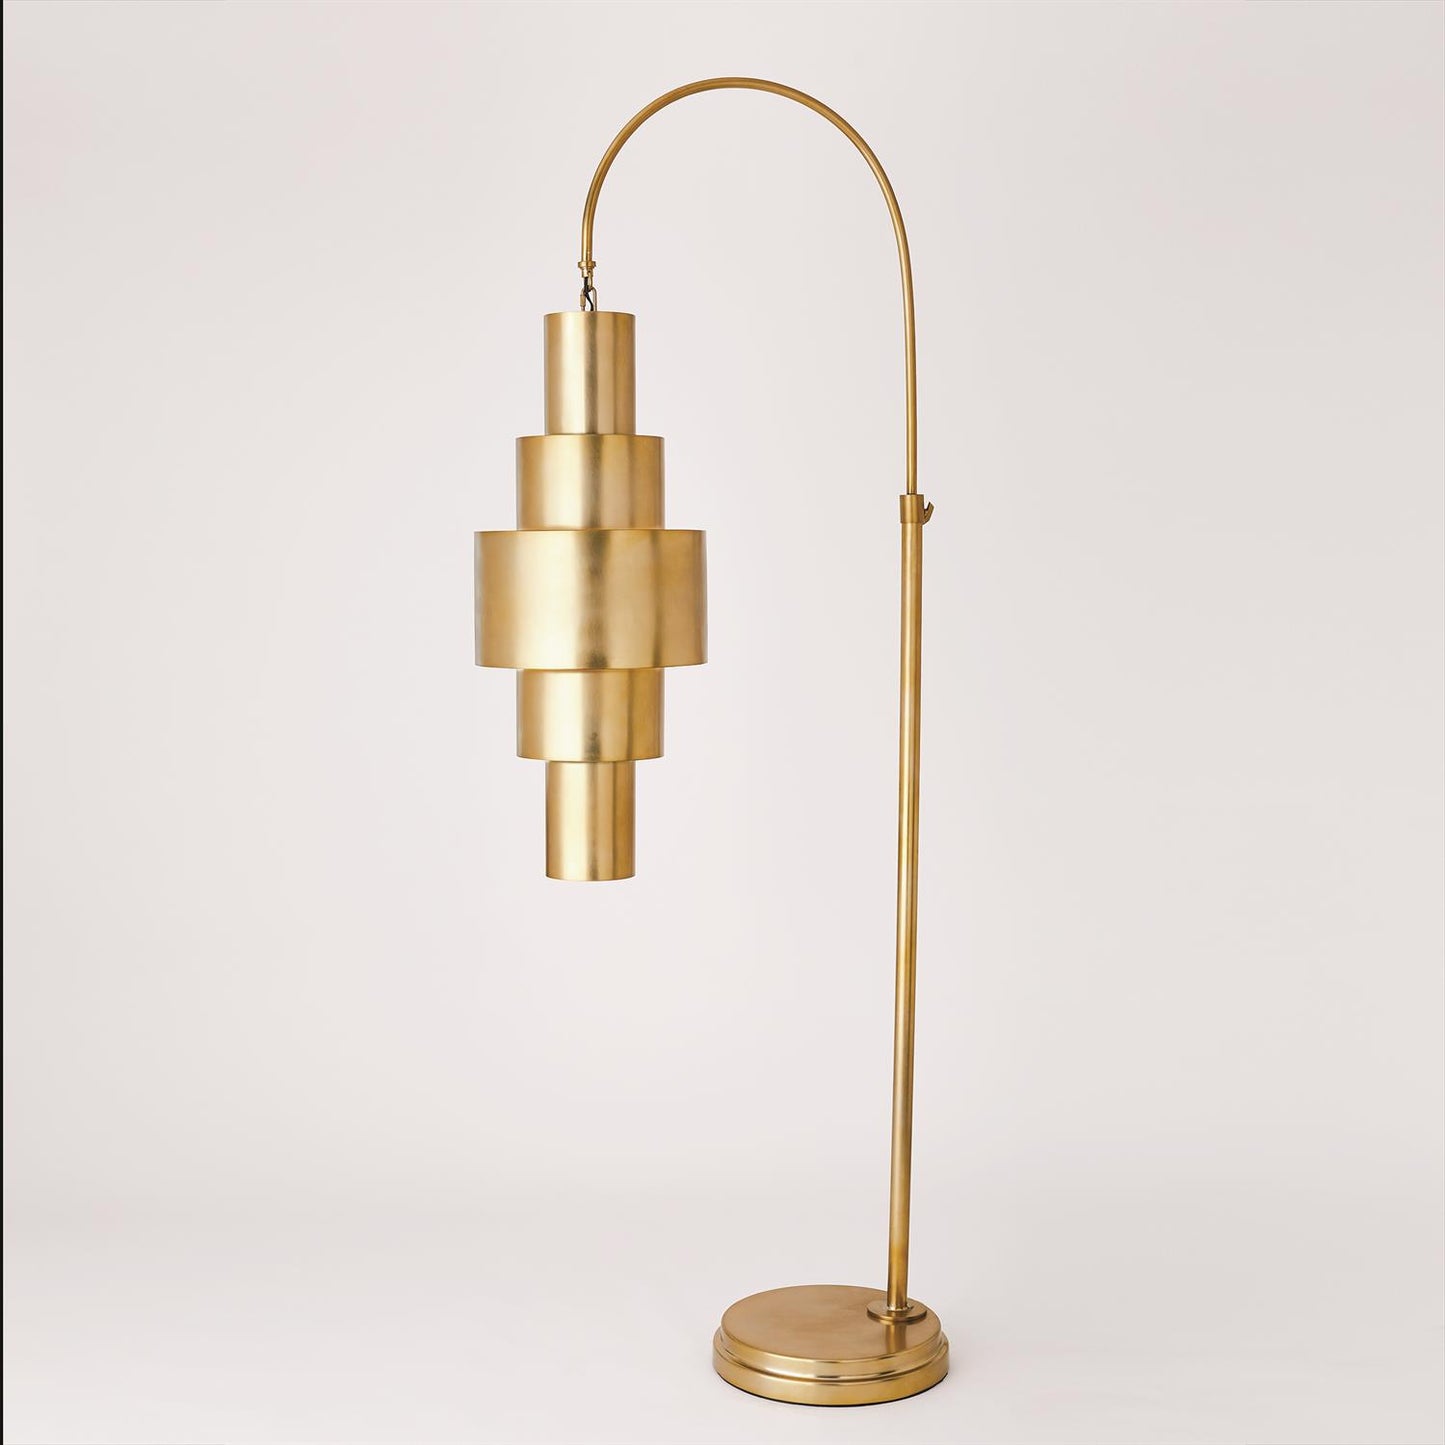 Babylon Floor Lamp - Antique Brass - Grats Decor Interior Design & Build Inc.